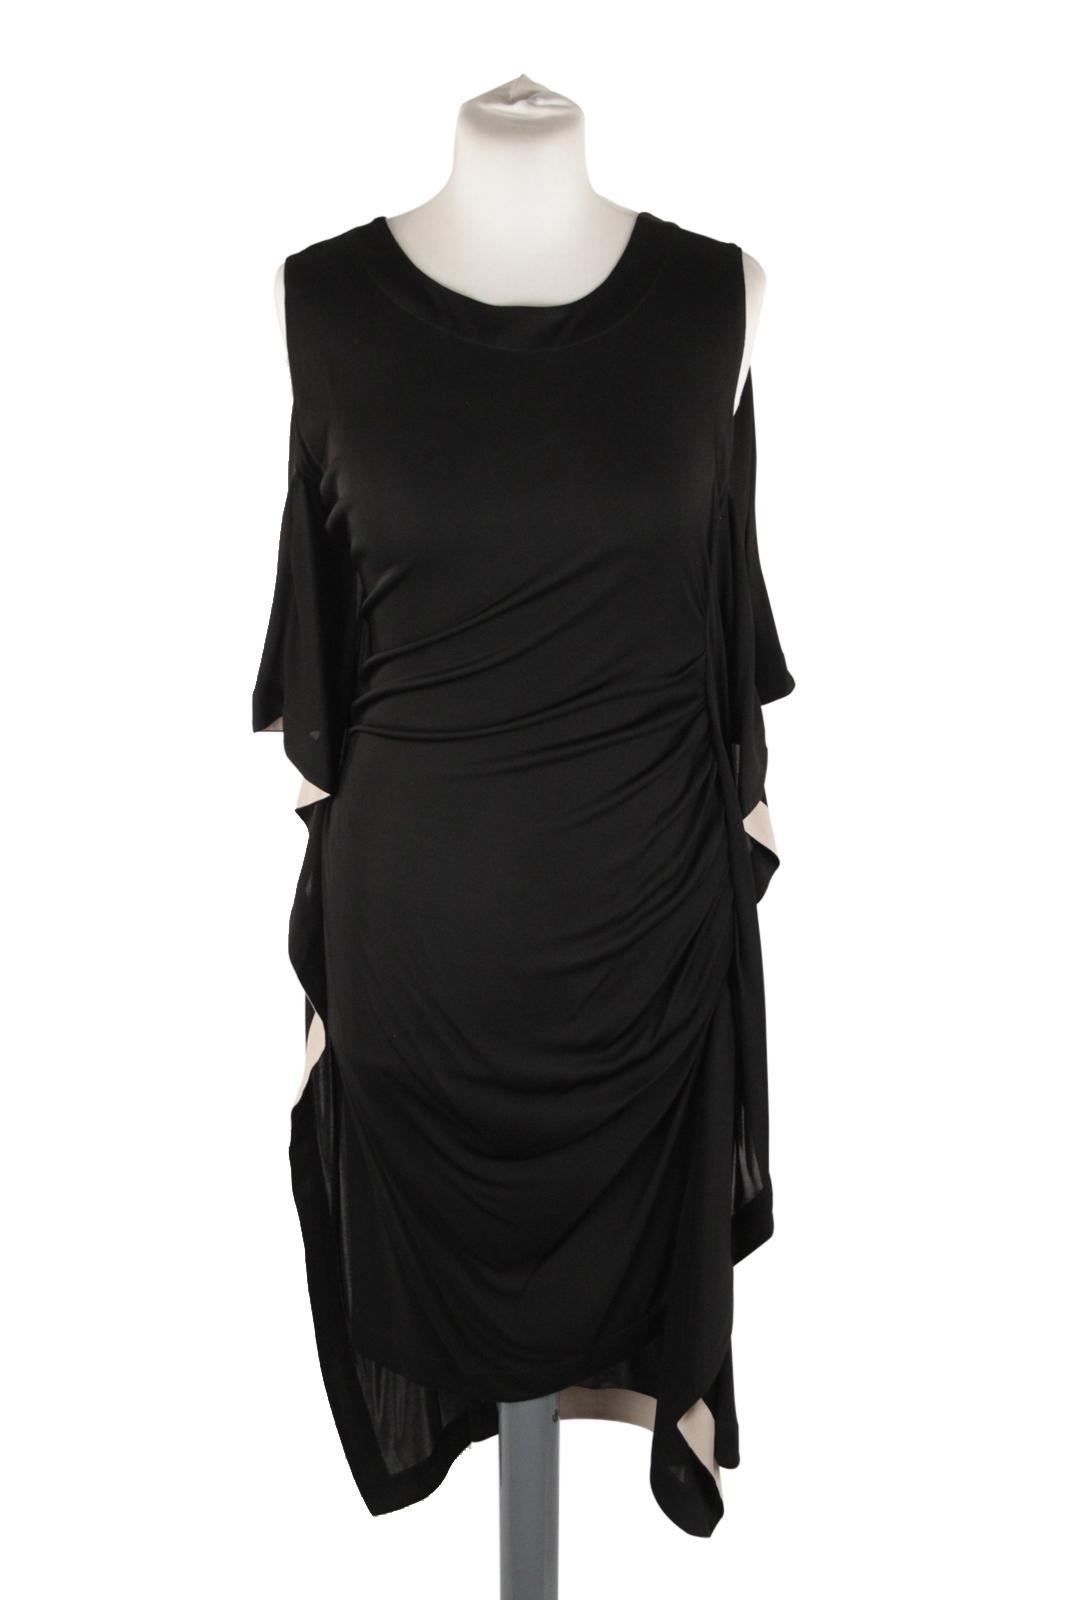 Vionnet Black Silky Sleeveless Dress Knee Lenght with Frills 1